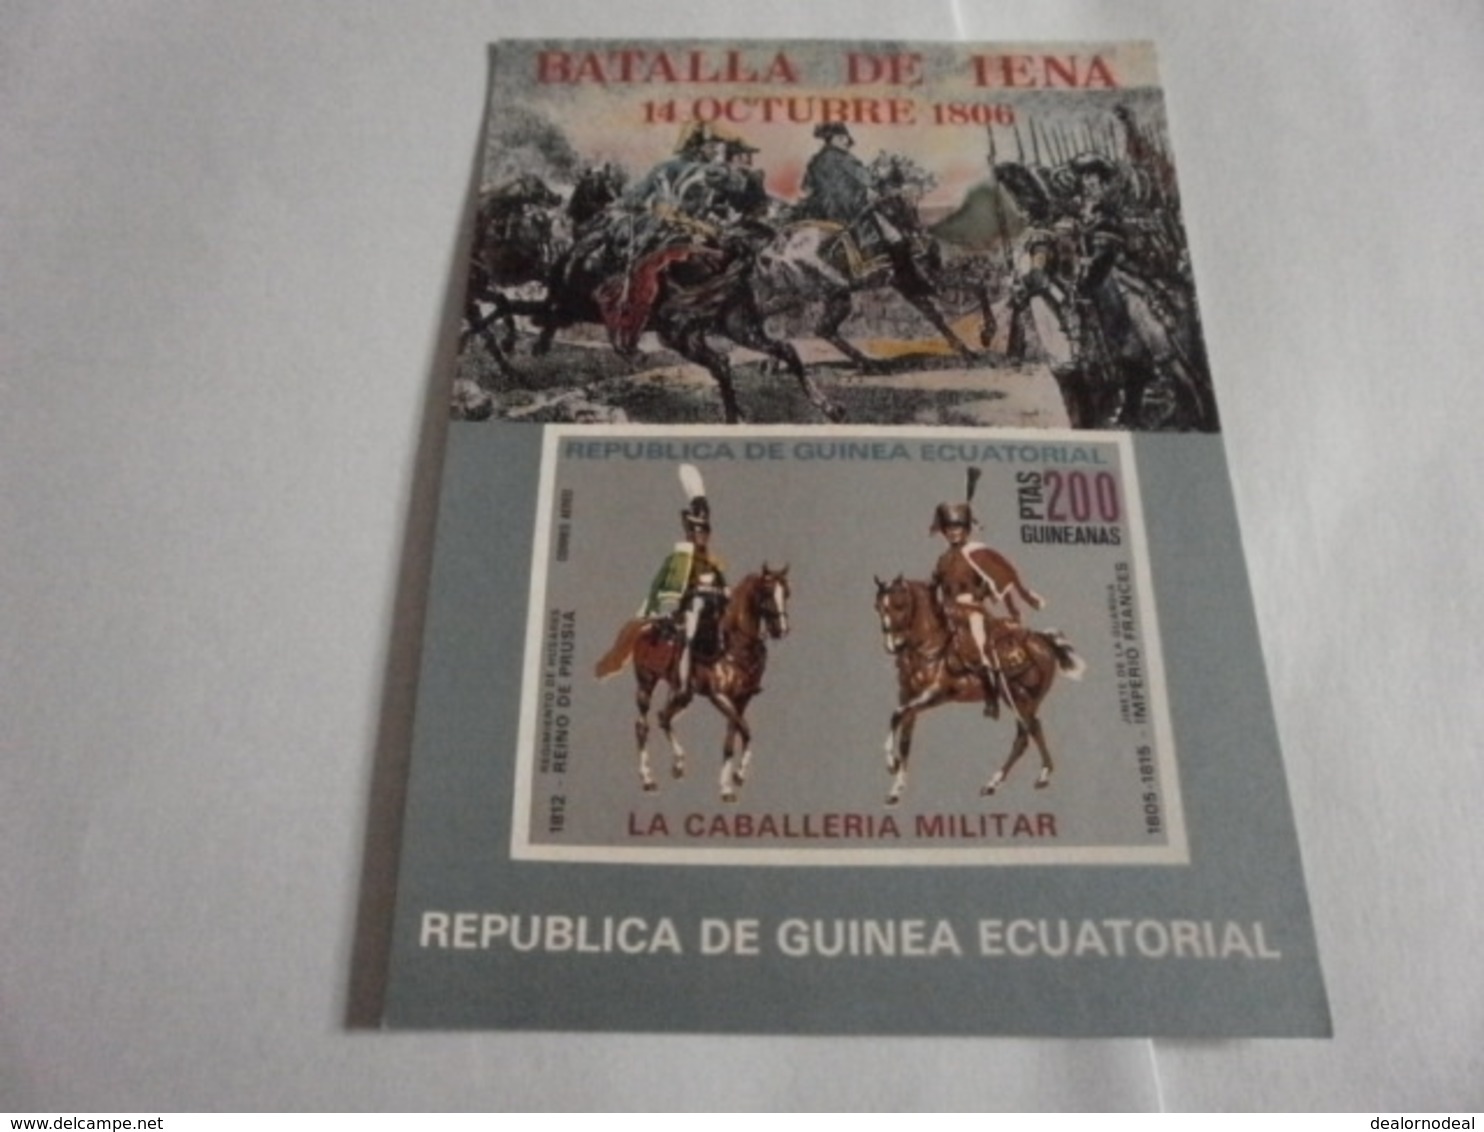 Miniature Sheet Imperf Military Horses - Equatorial Guinea